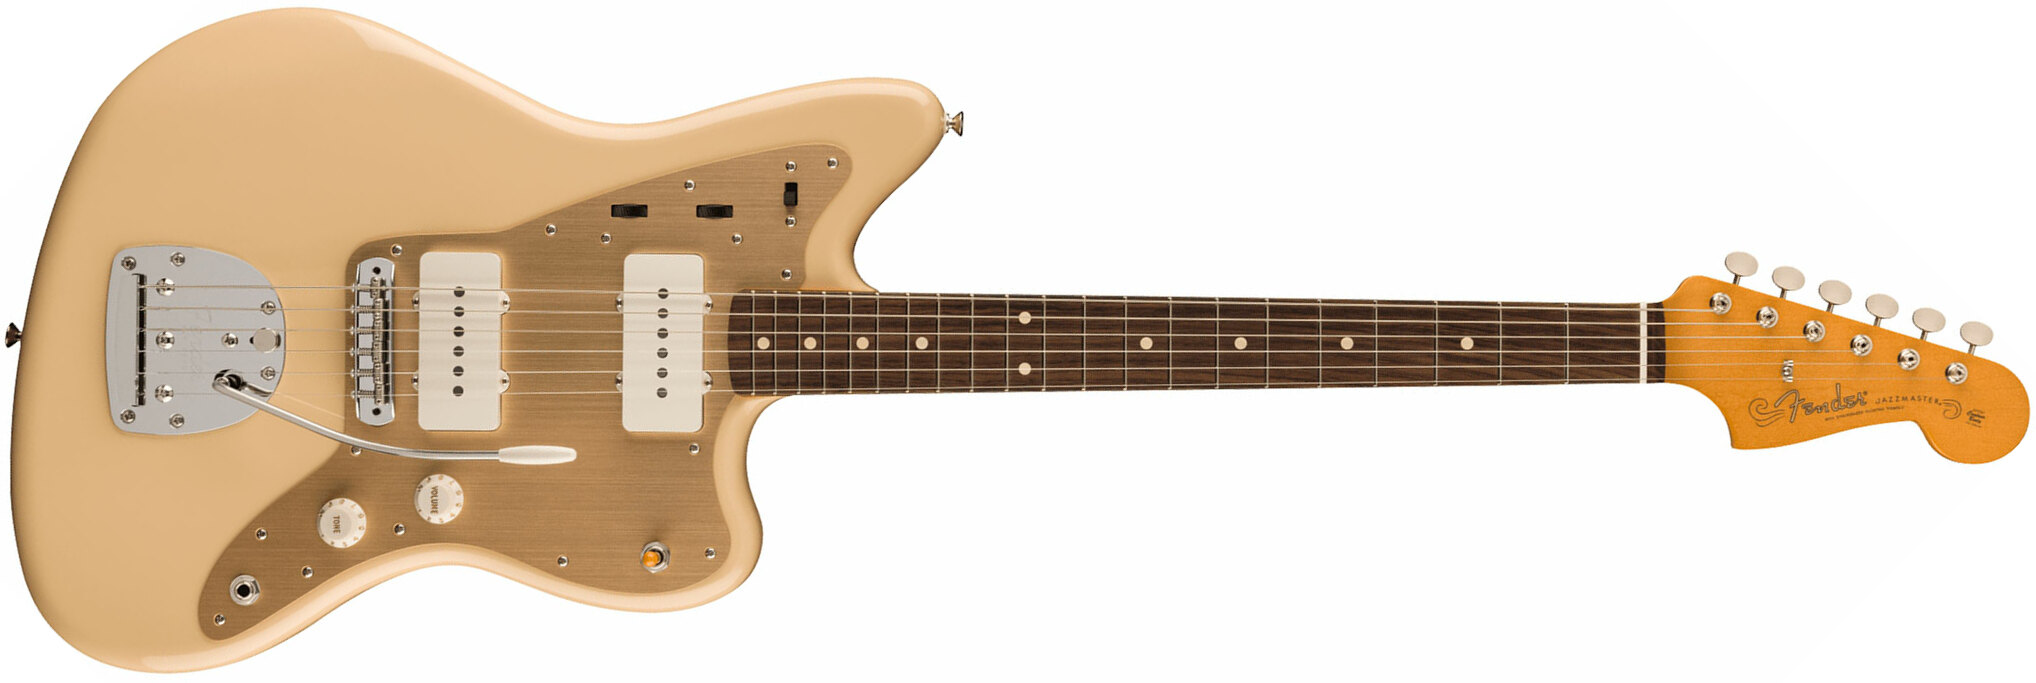 Fender Jazzmaster 50s Vintera 2 Mex 2s Trem Rw - Desert Sand - Retro rock electric guitar - Main picture